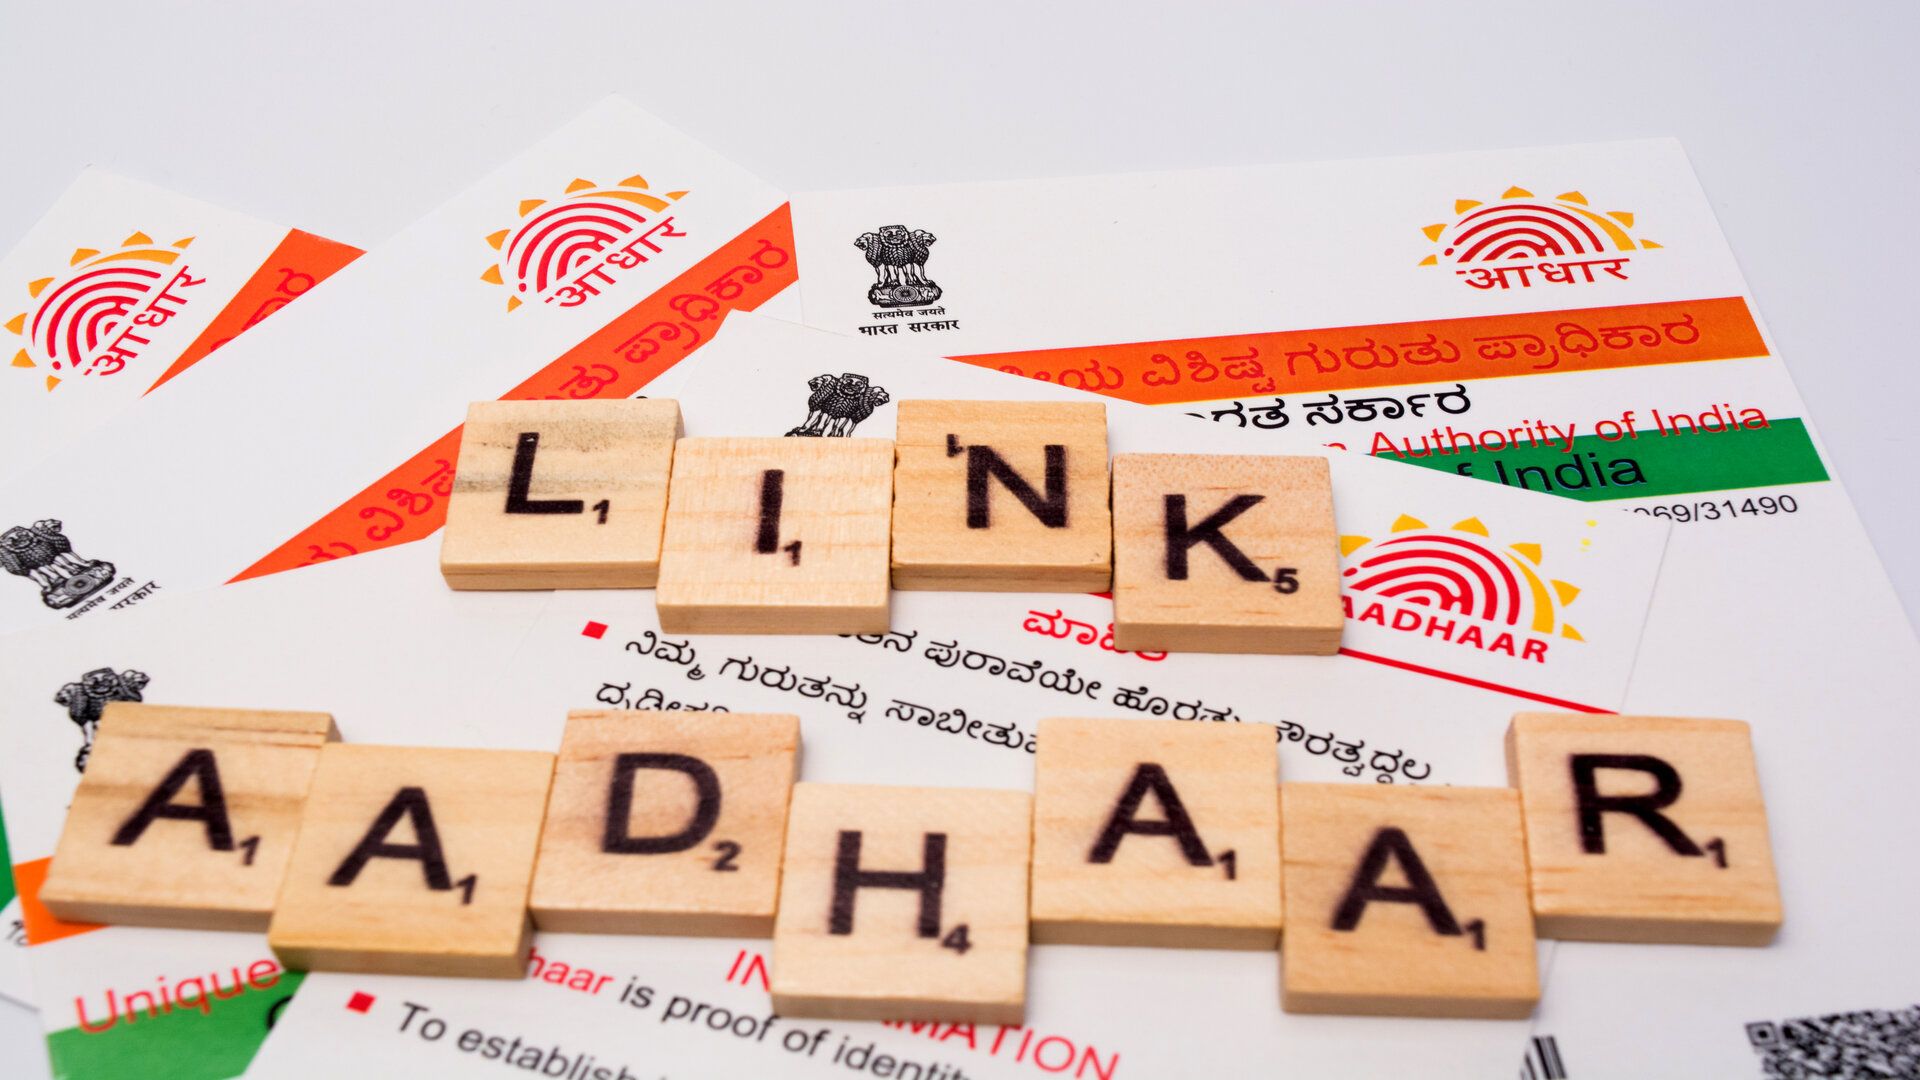 How to Link Aadhaar Card to Bank Account?